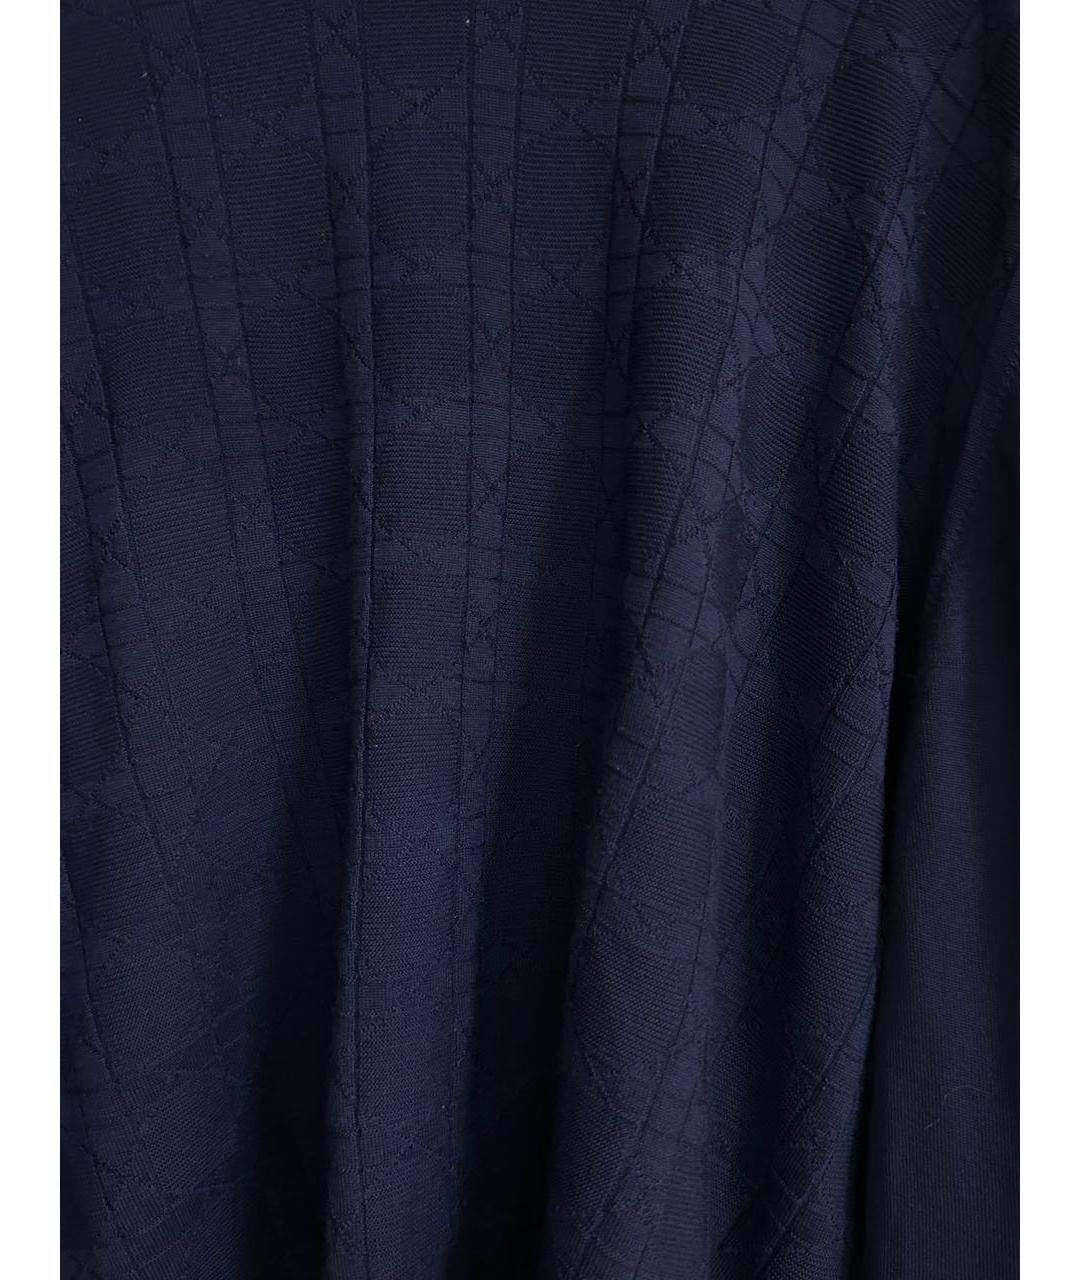 SVEVO Темно-синий шерстяной джемпер / свитер, фото 3